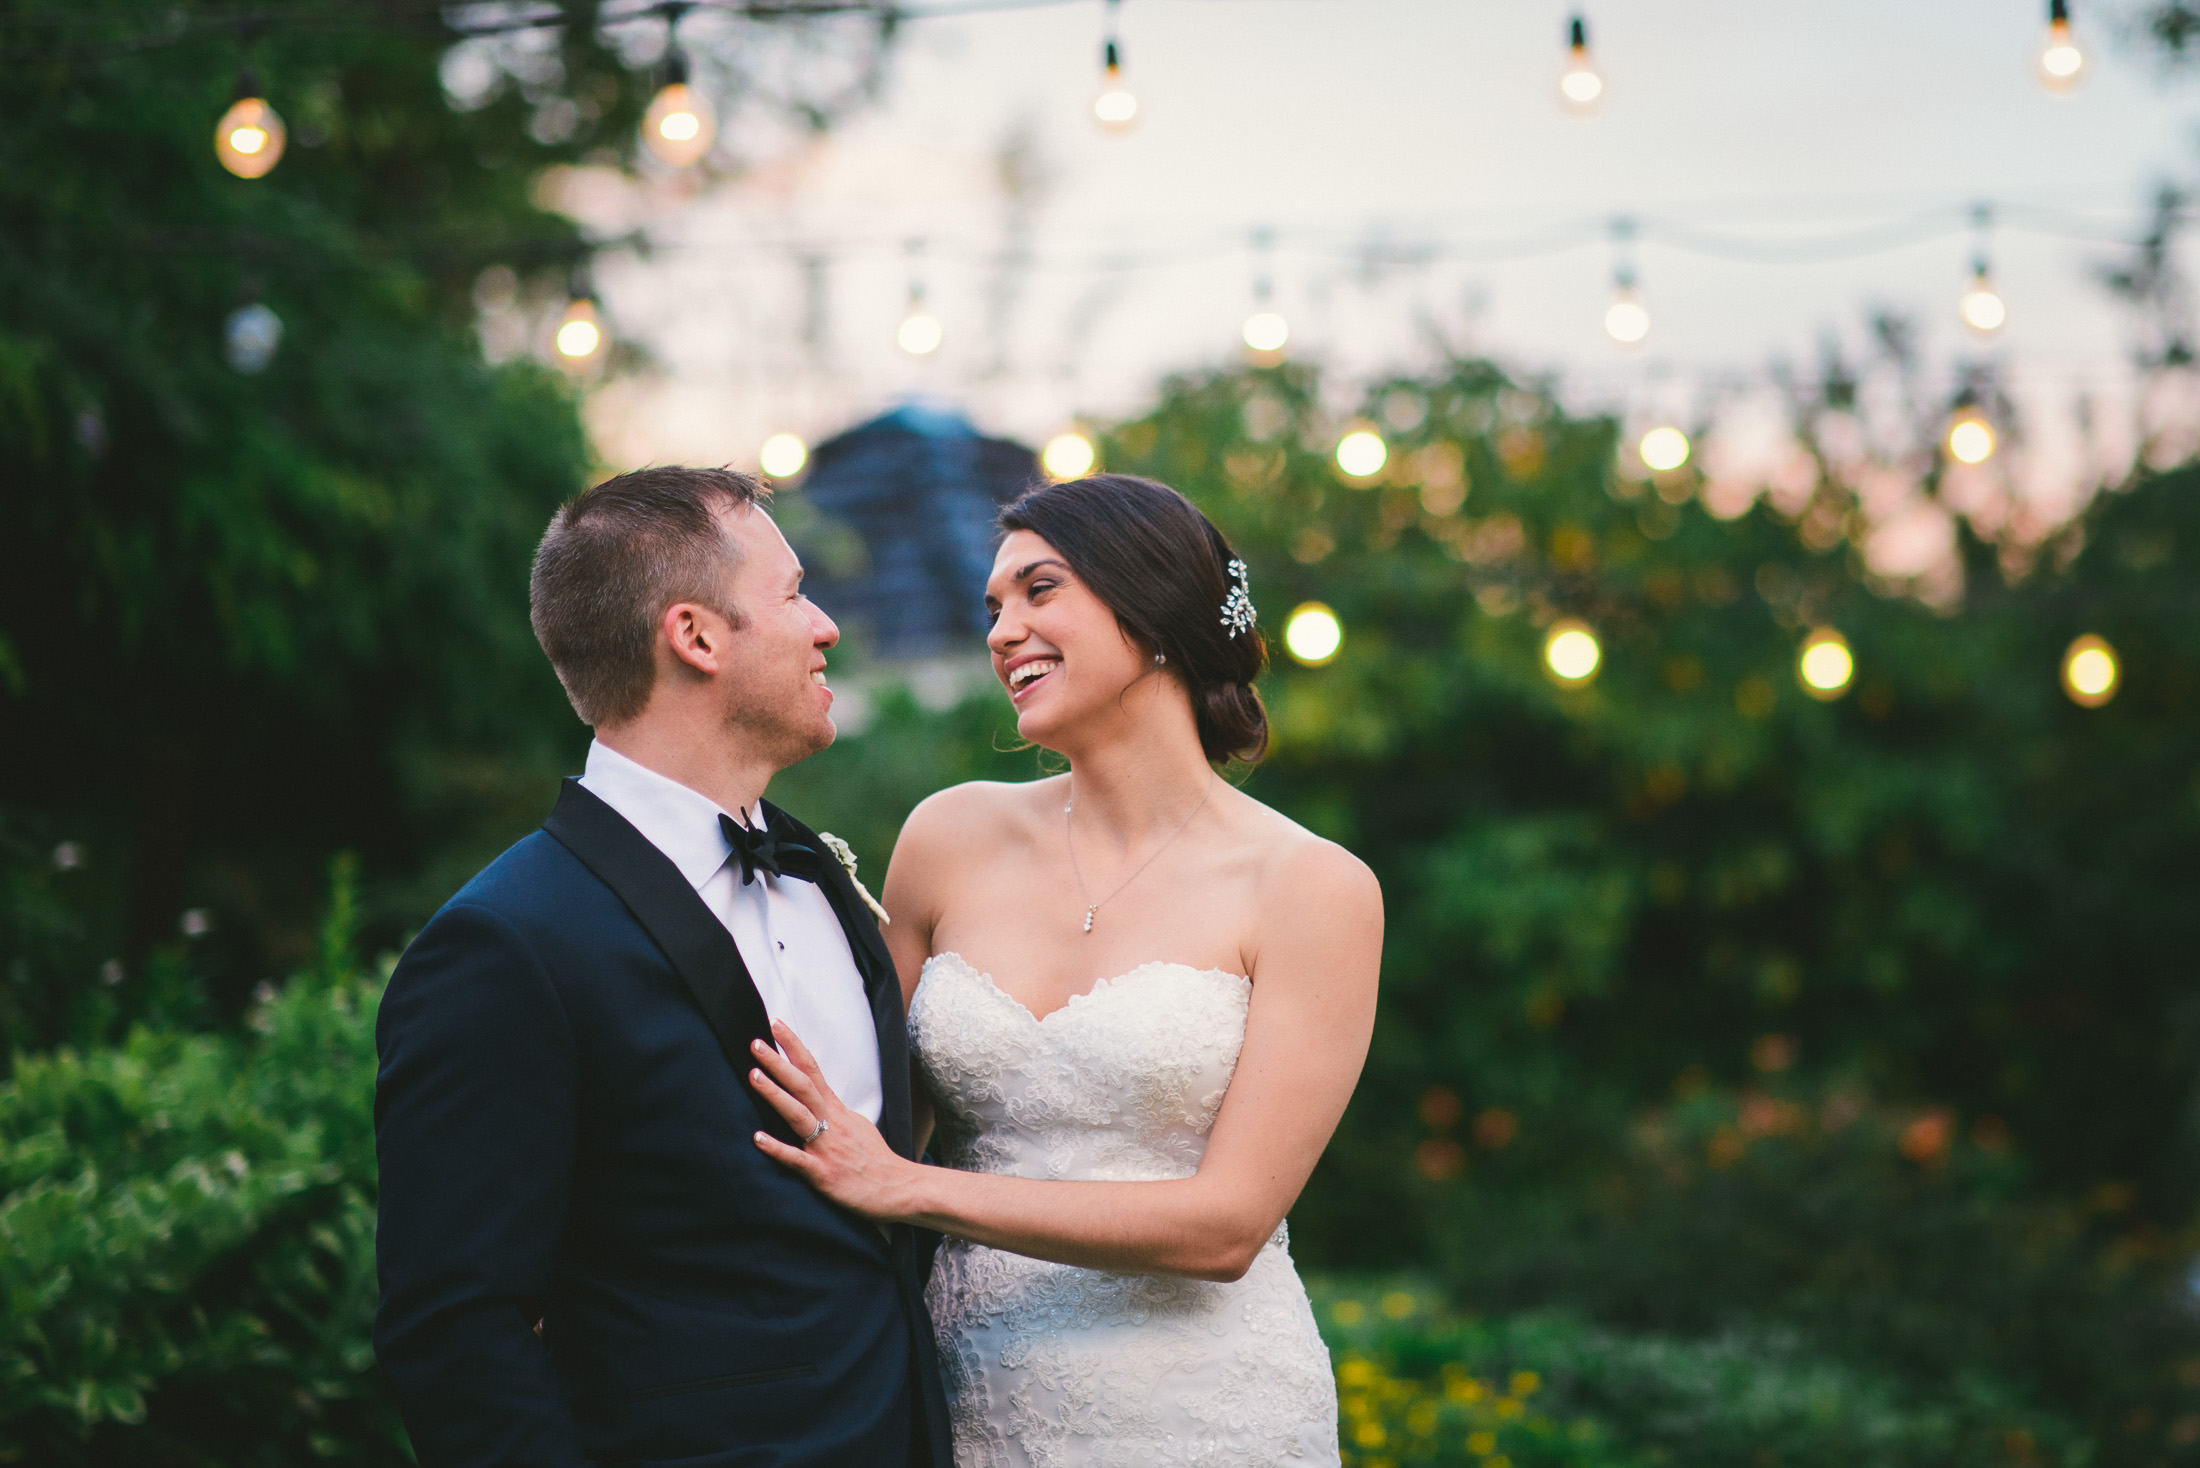 NH Wedding Photographer: couple under lights